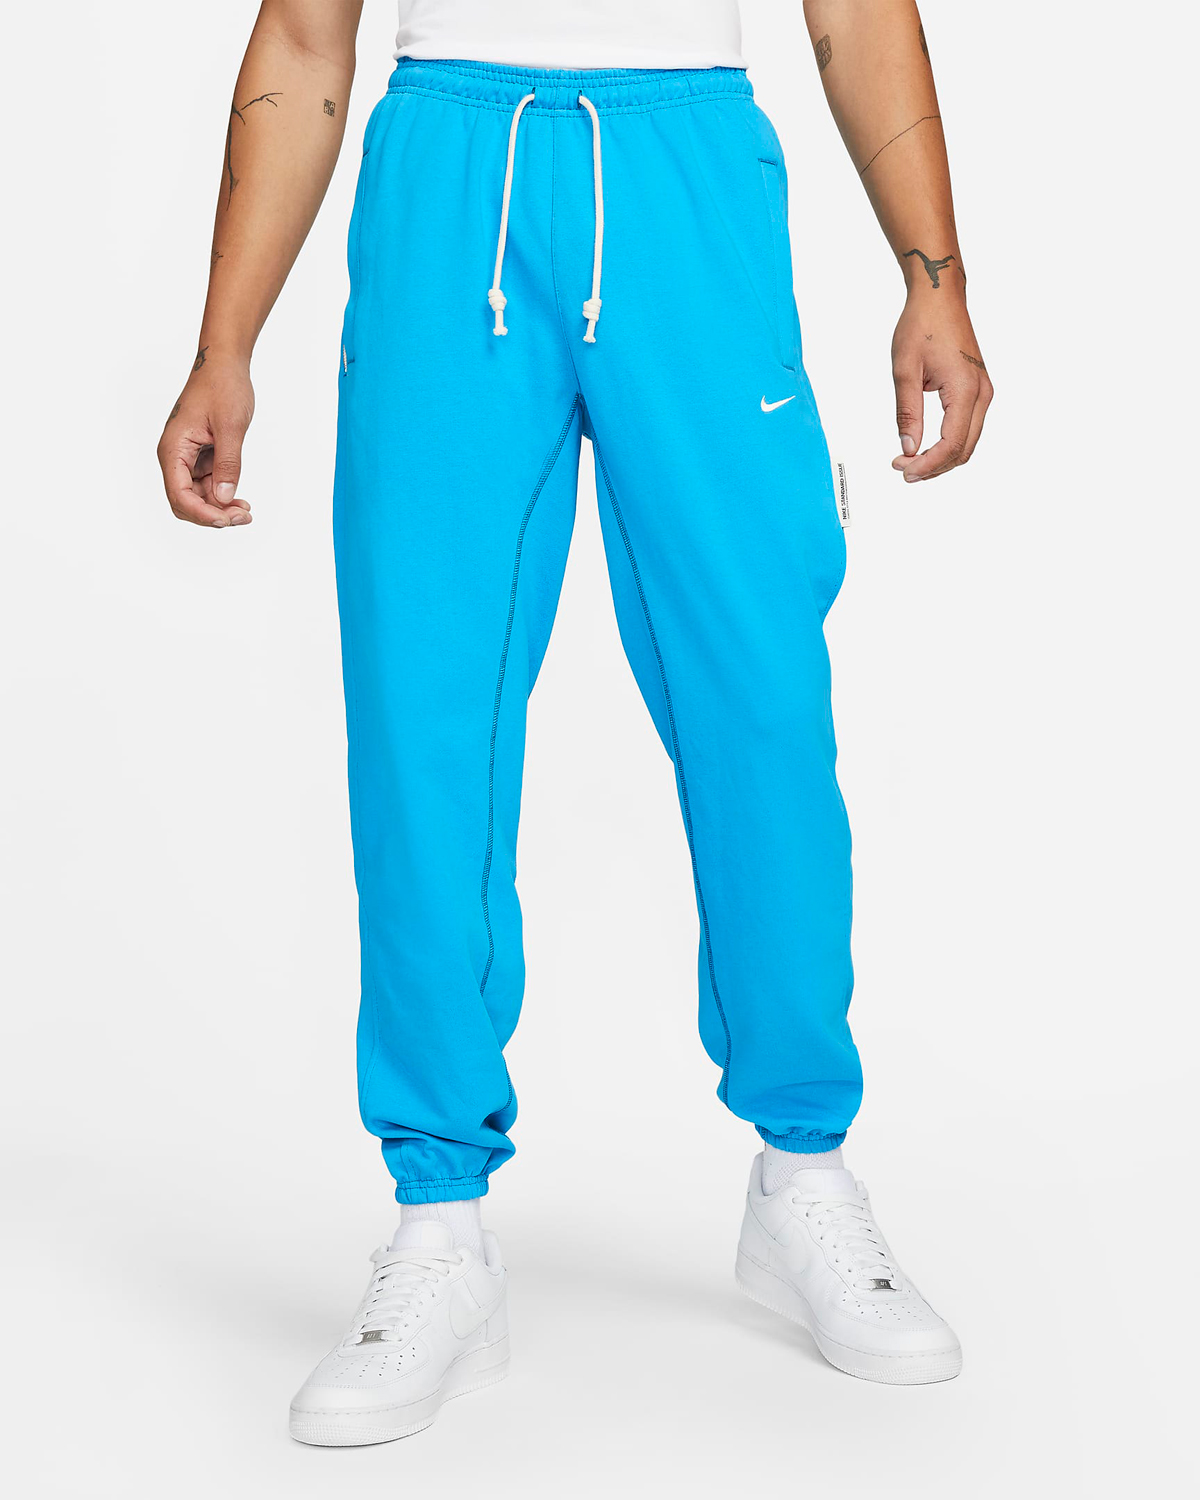 nike-standard-issue-pants-laser-blue